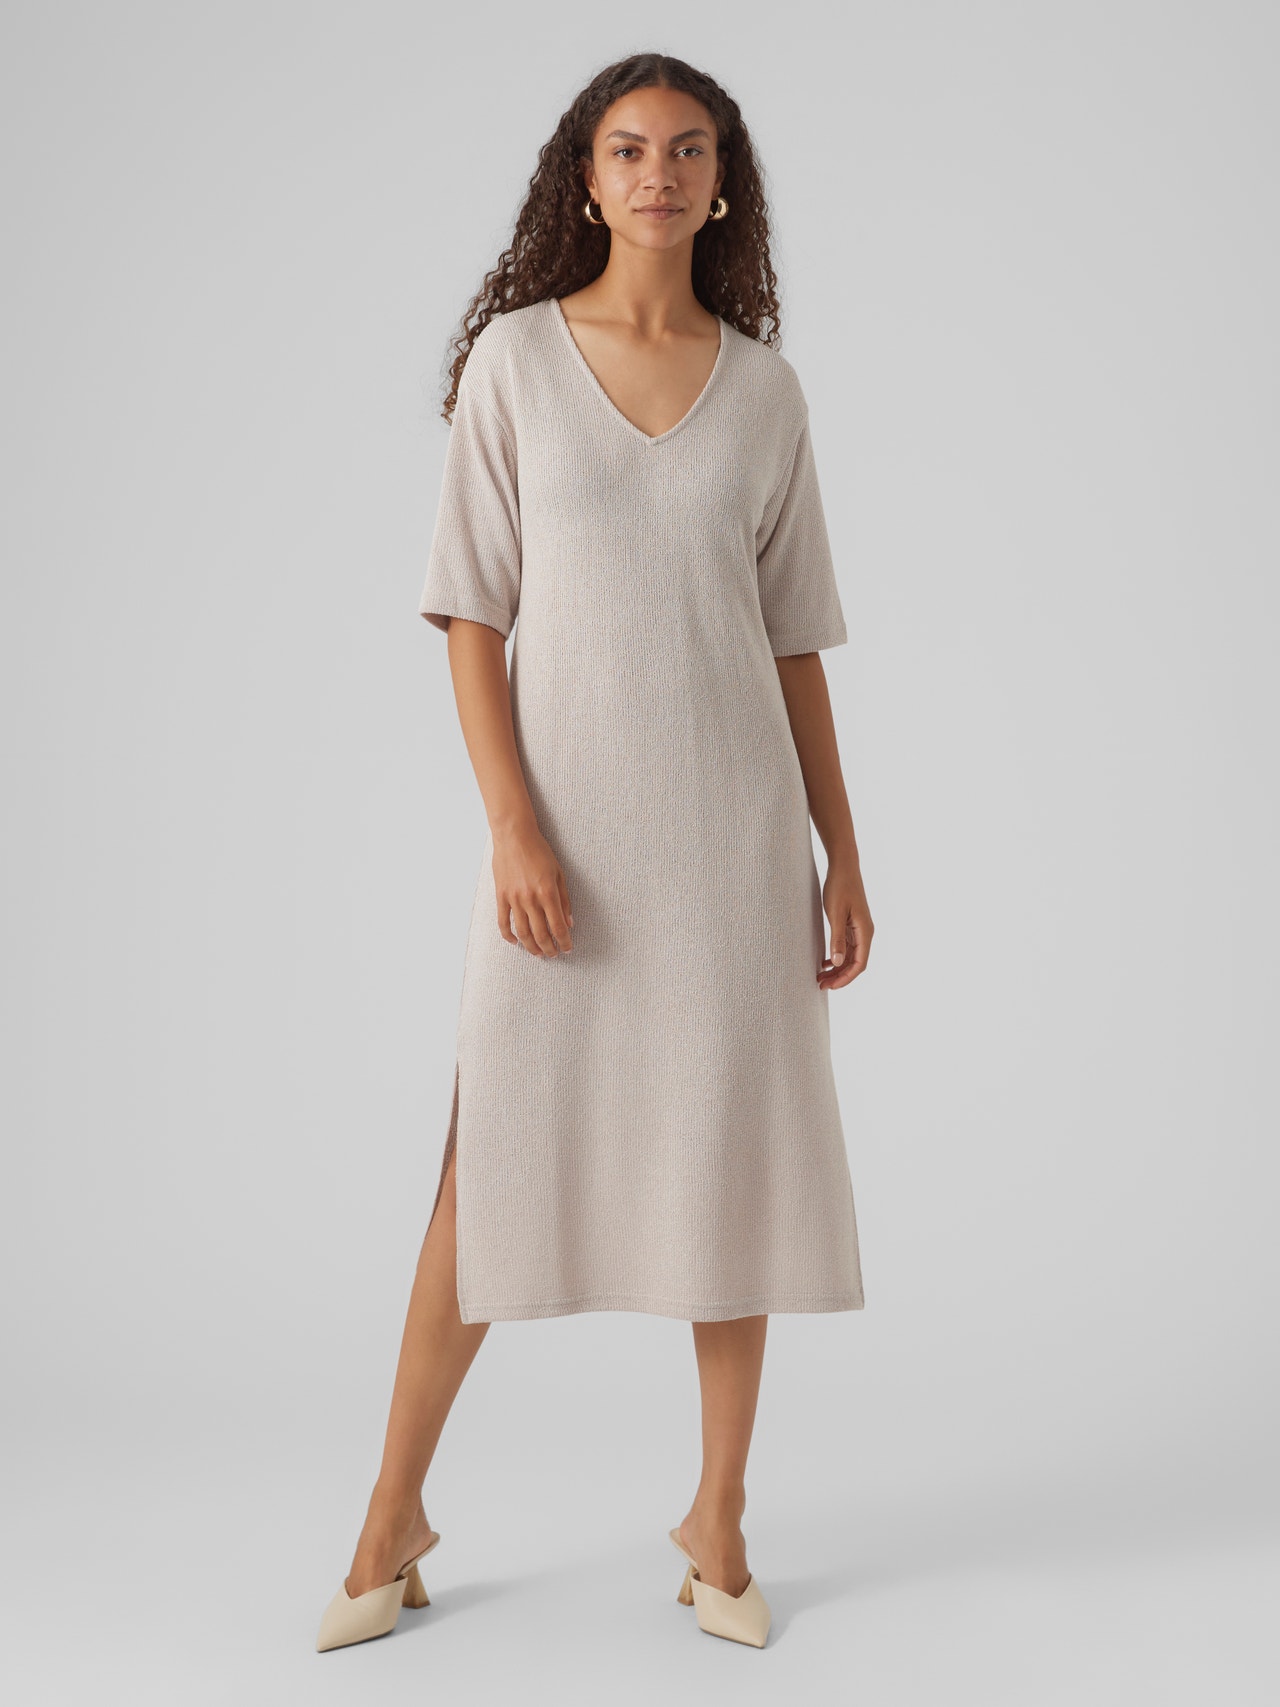 Vero Moda VMEDDIE Long dress -Oatmeal - 10300284